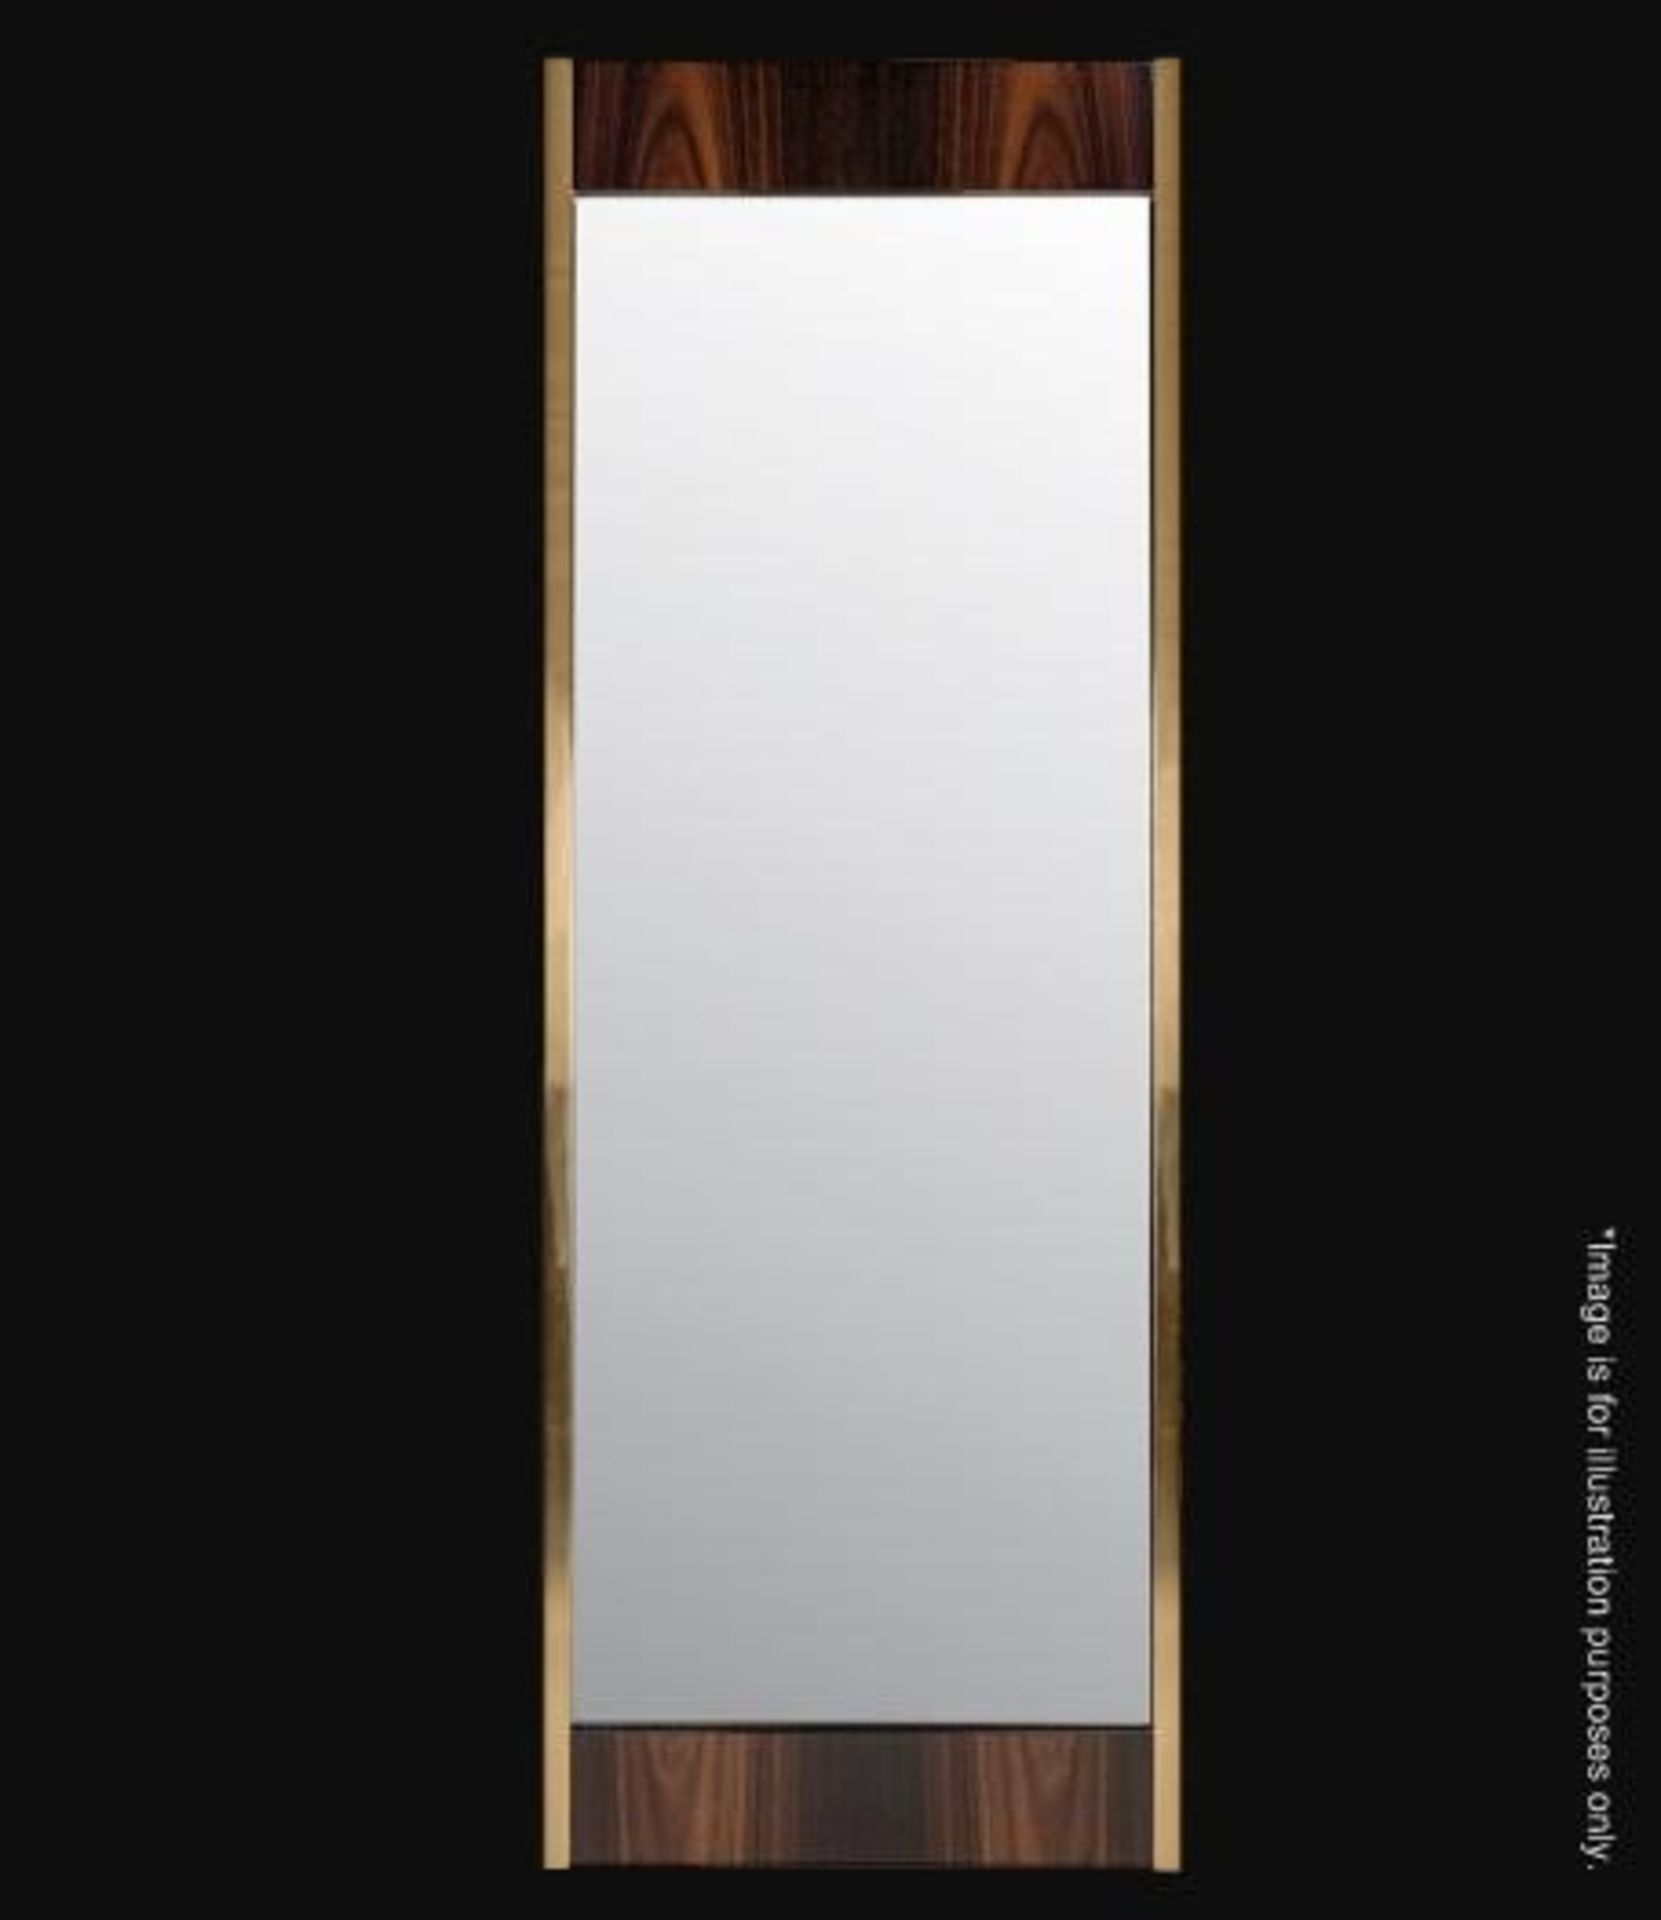 1 x FRATO Phoenix Floor Mirror - Dimensions: W70 x D6 x H200cm - Ref: 6012071 NP1/18 - CL087 - Locat